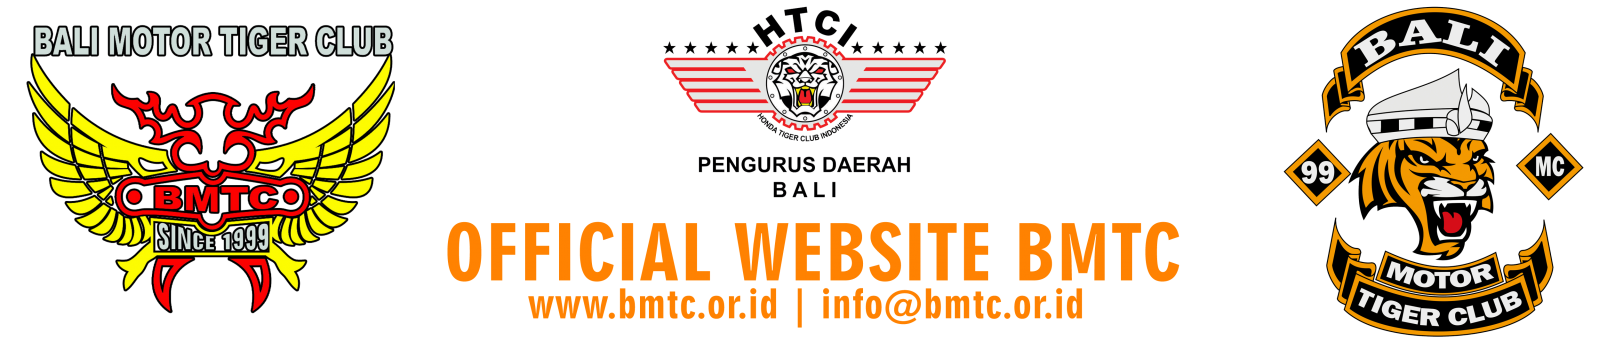 Bali Motor Tiger Club